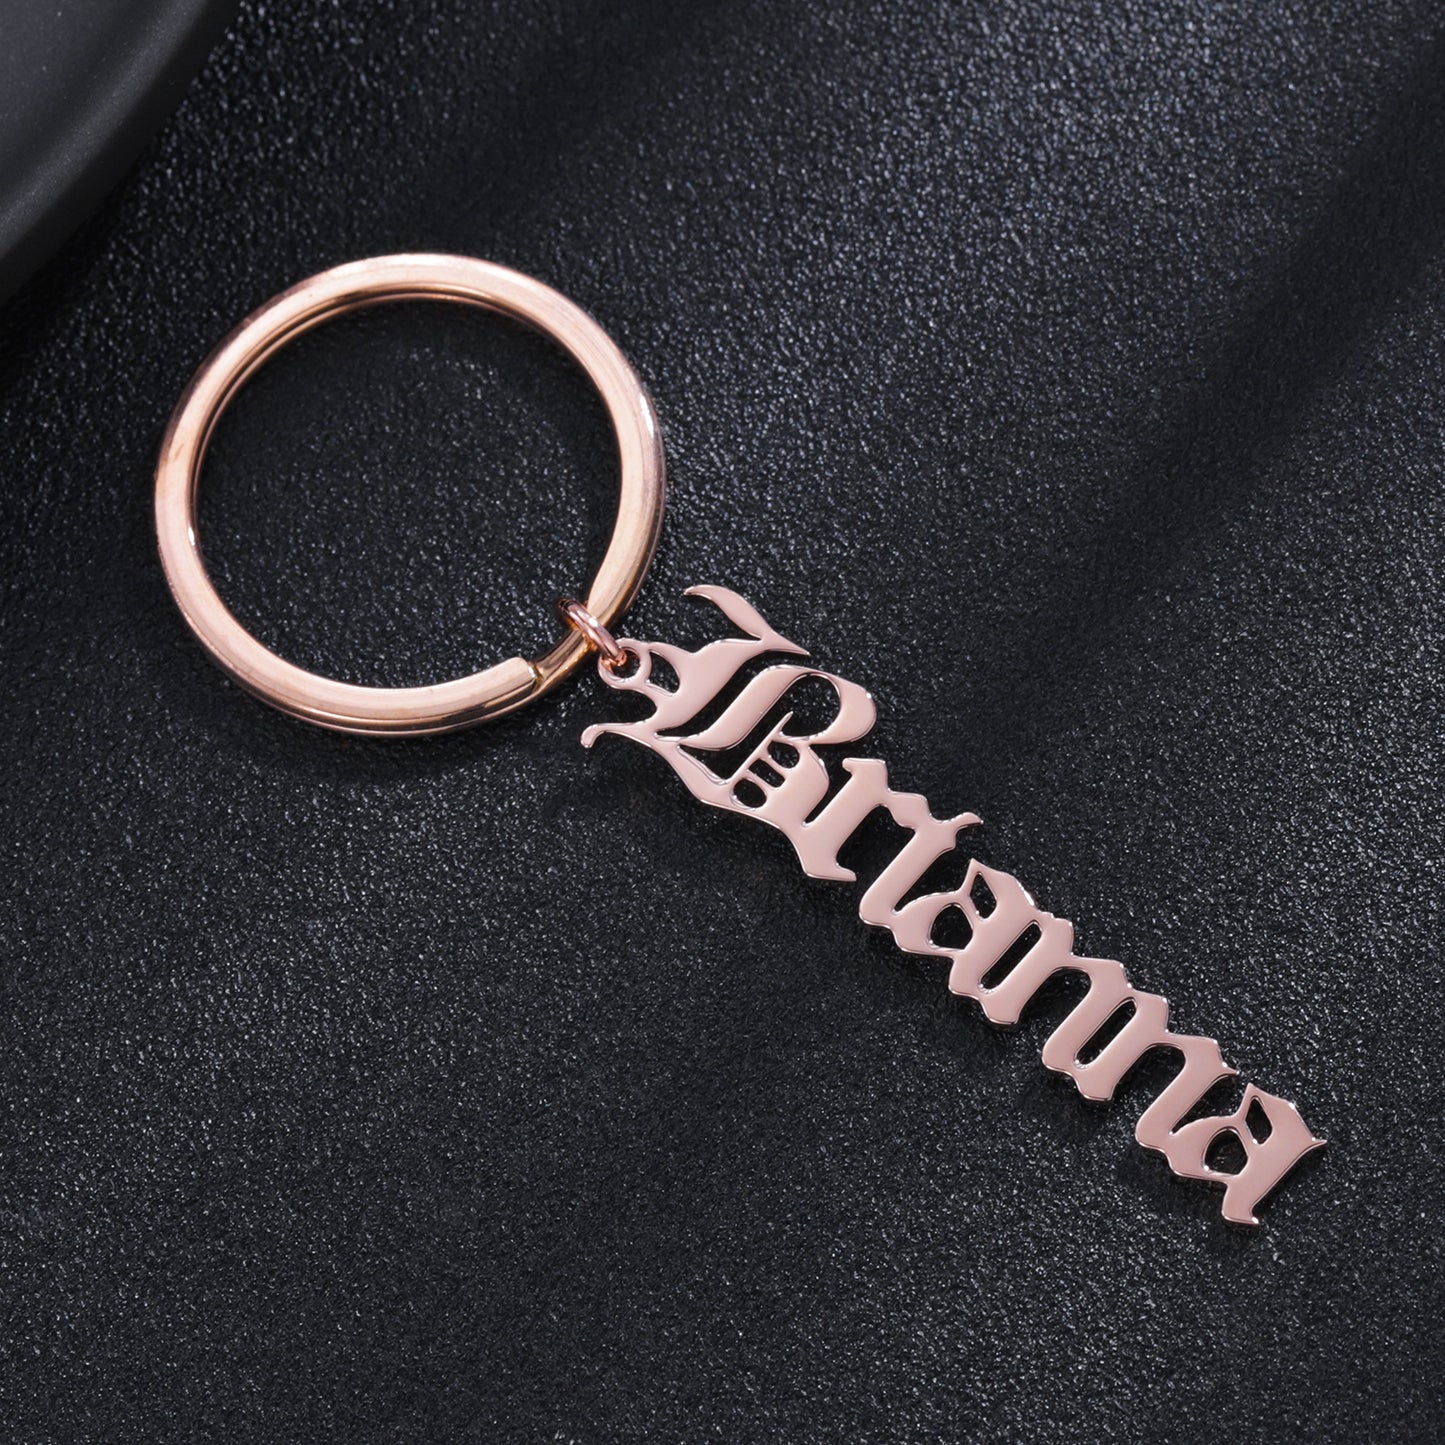 Personalised Custom Single Name Key Chain Keychain Keyring - Unisex Arabic English Gift - ANAAYA